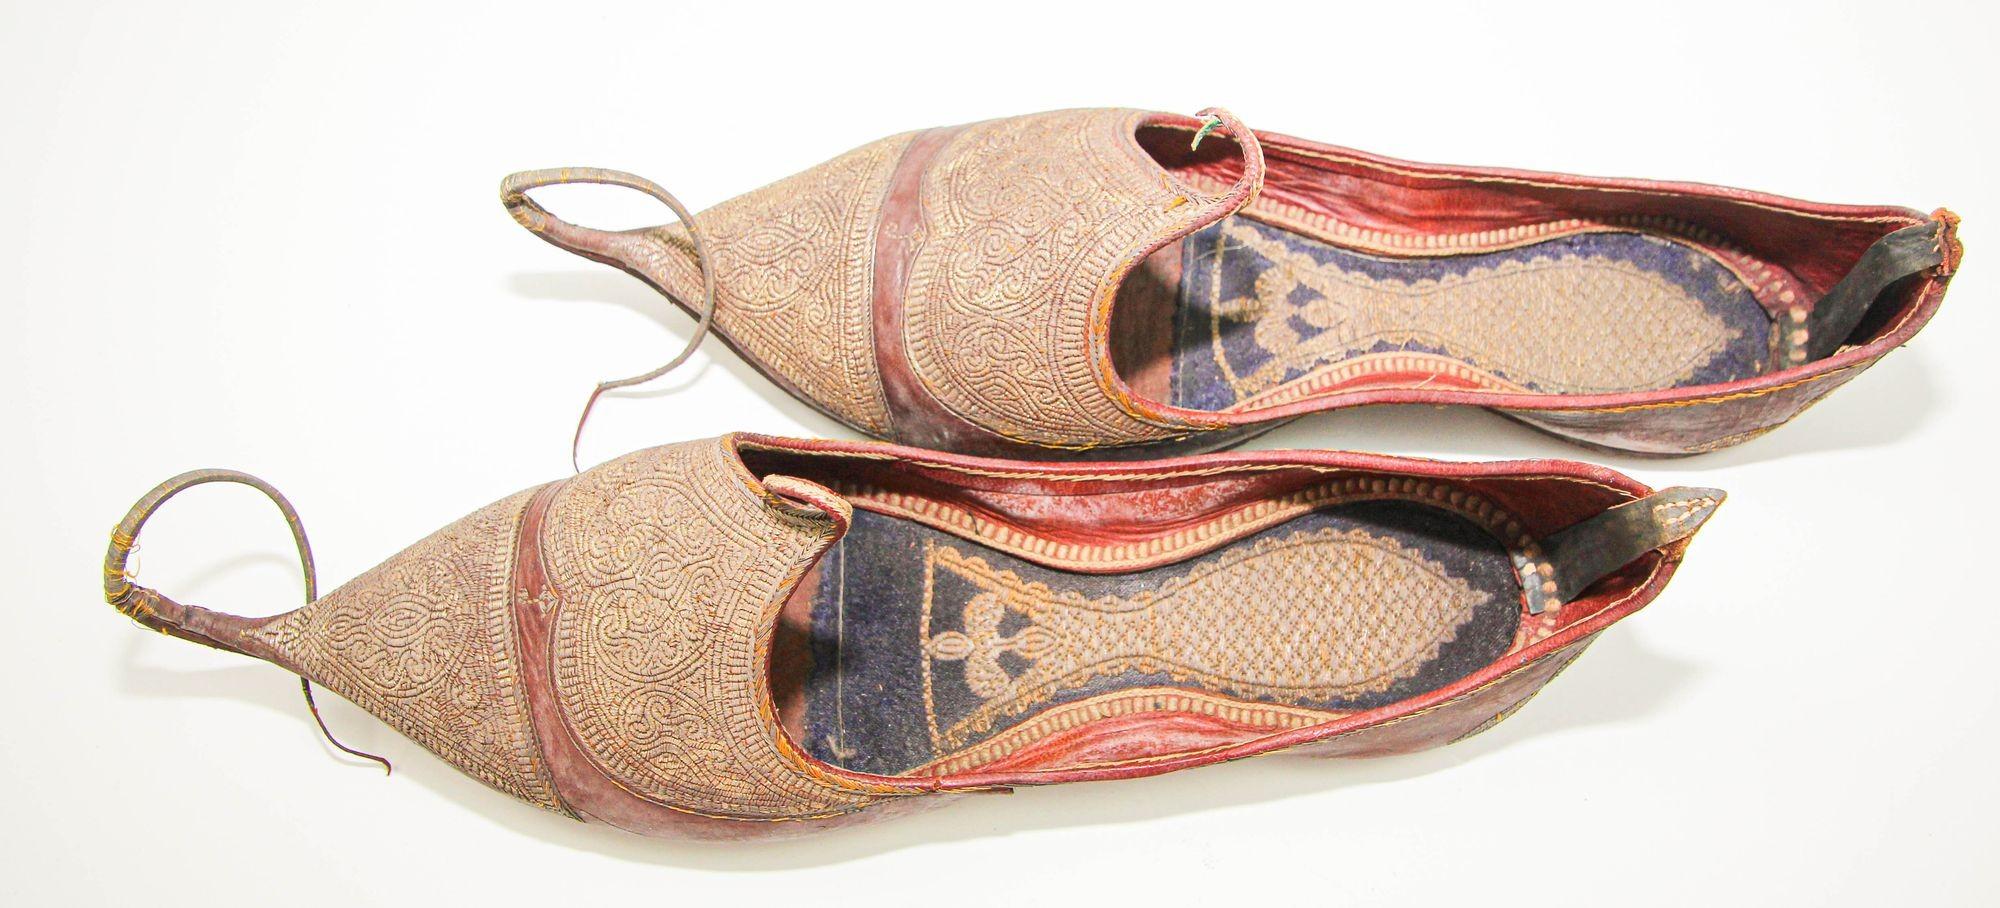 islamic sandals